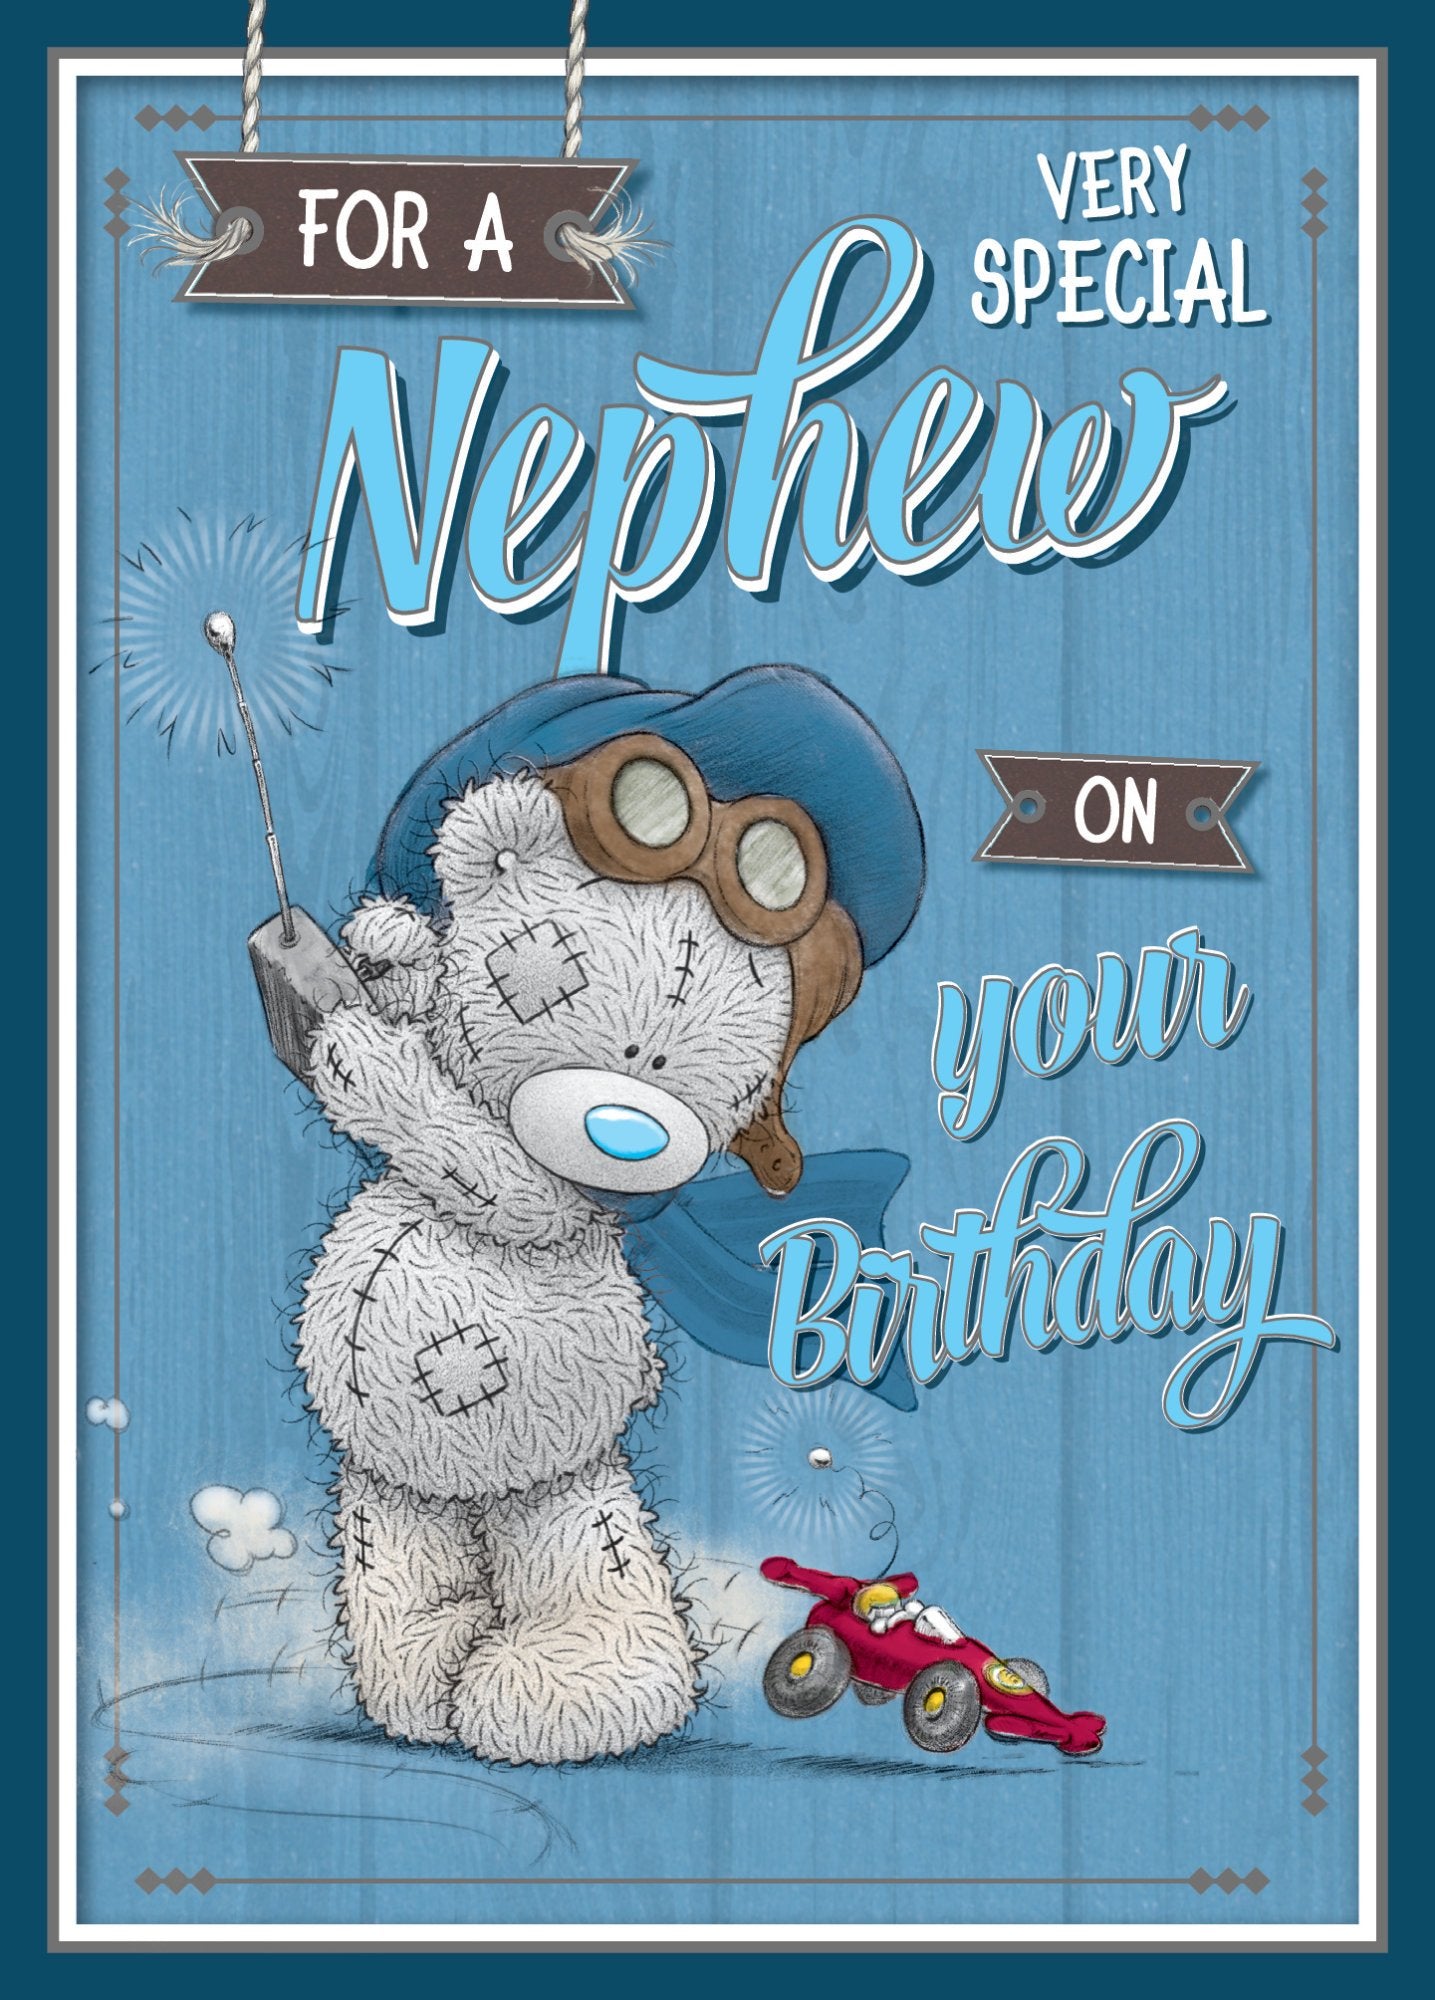 Photograph of Nephew Birthday Teddy RC Car Greetings Card at Nicole's Shop